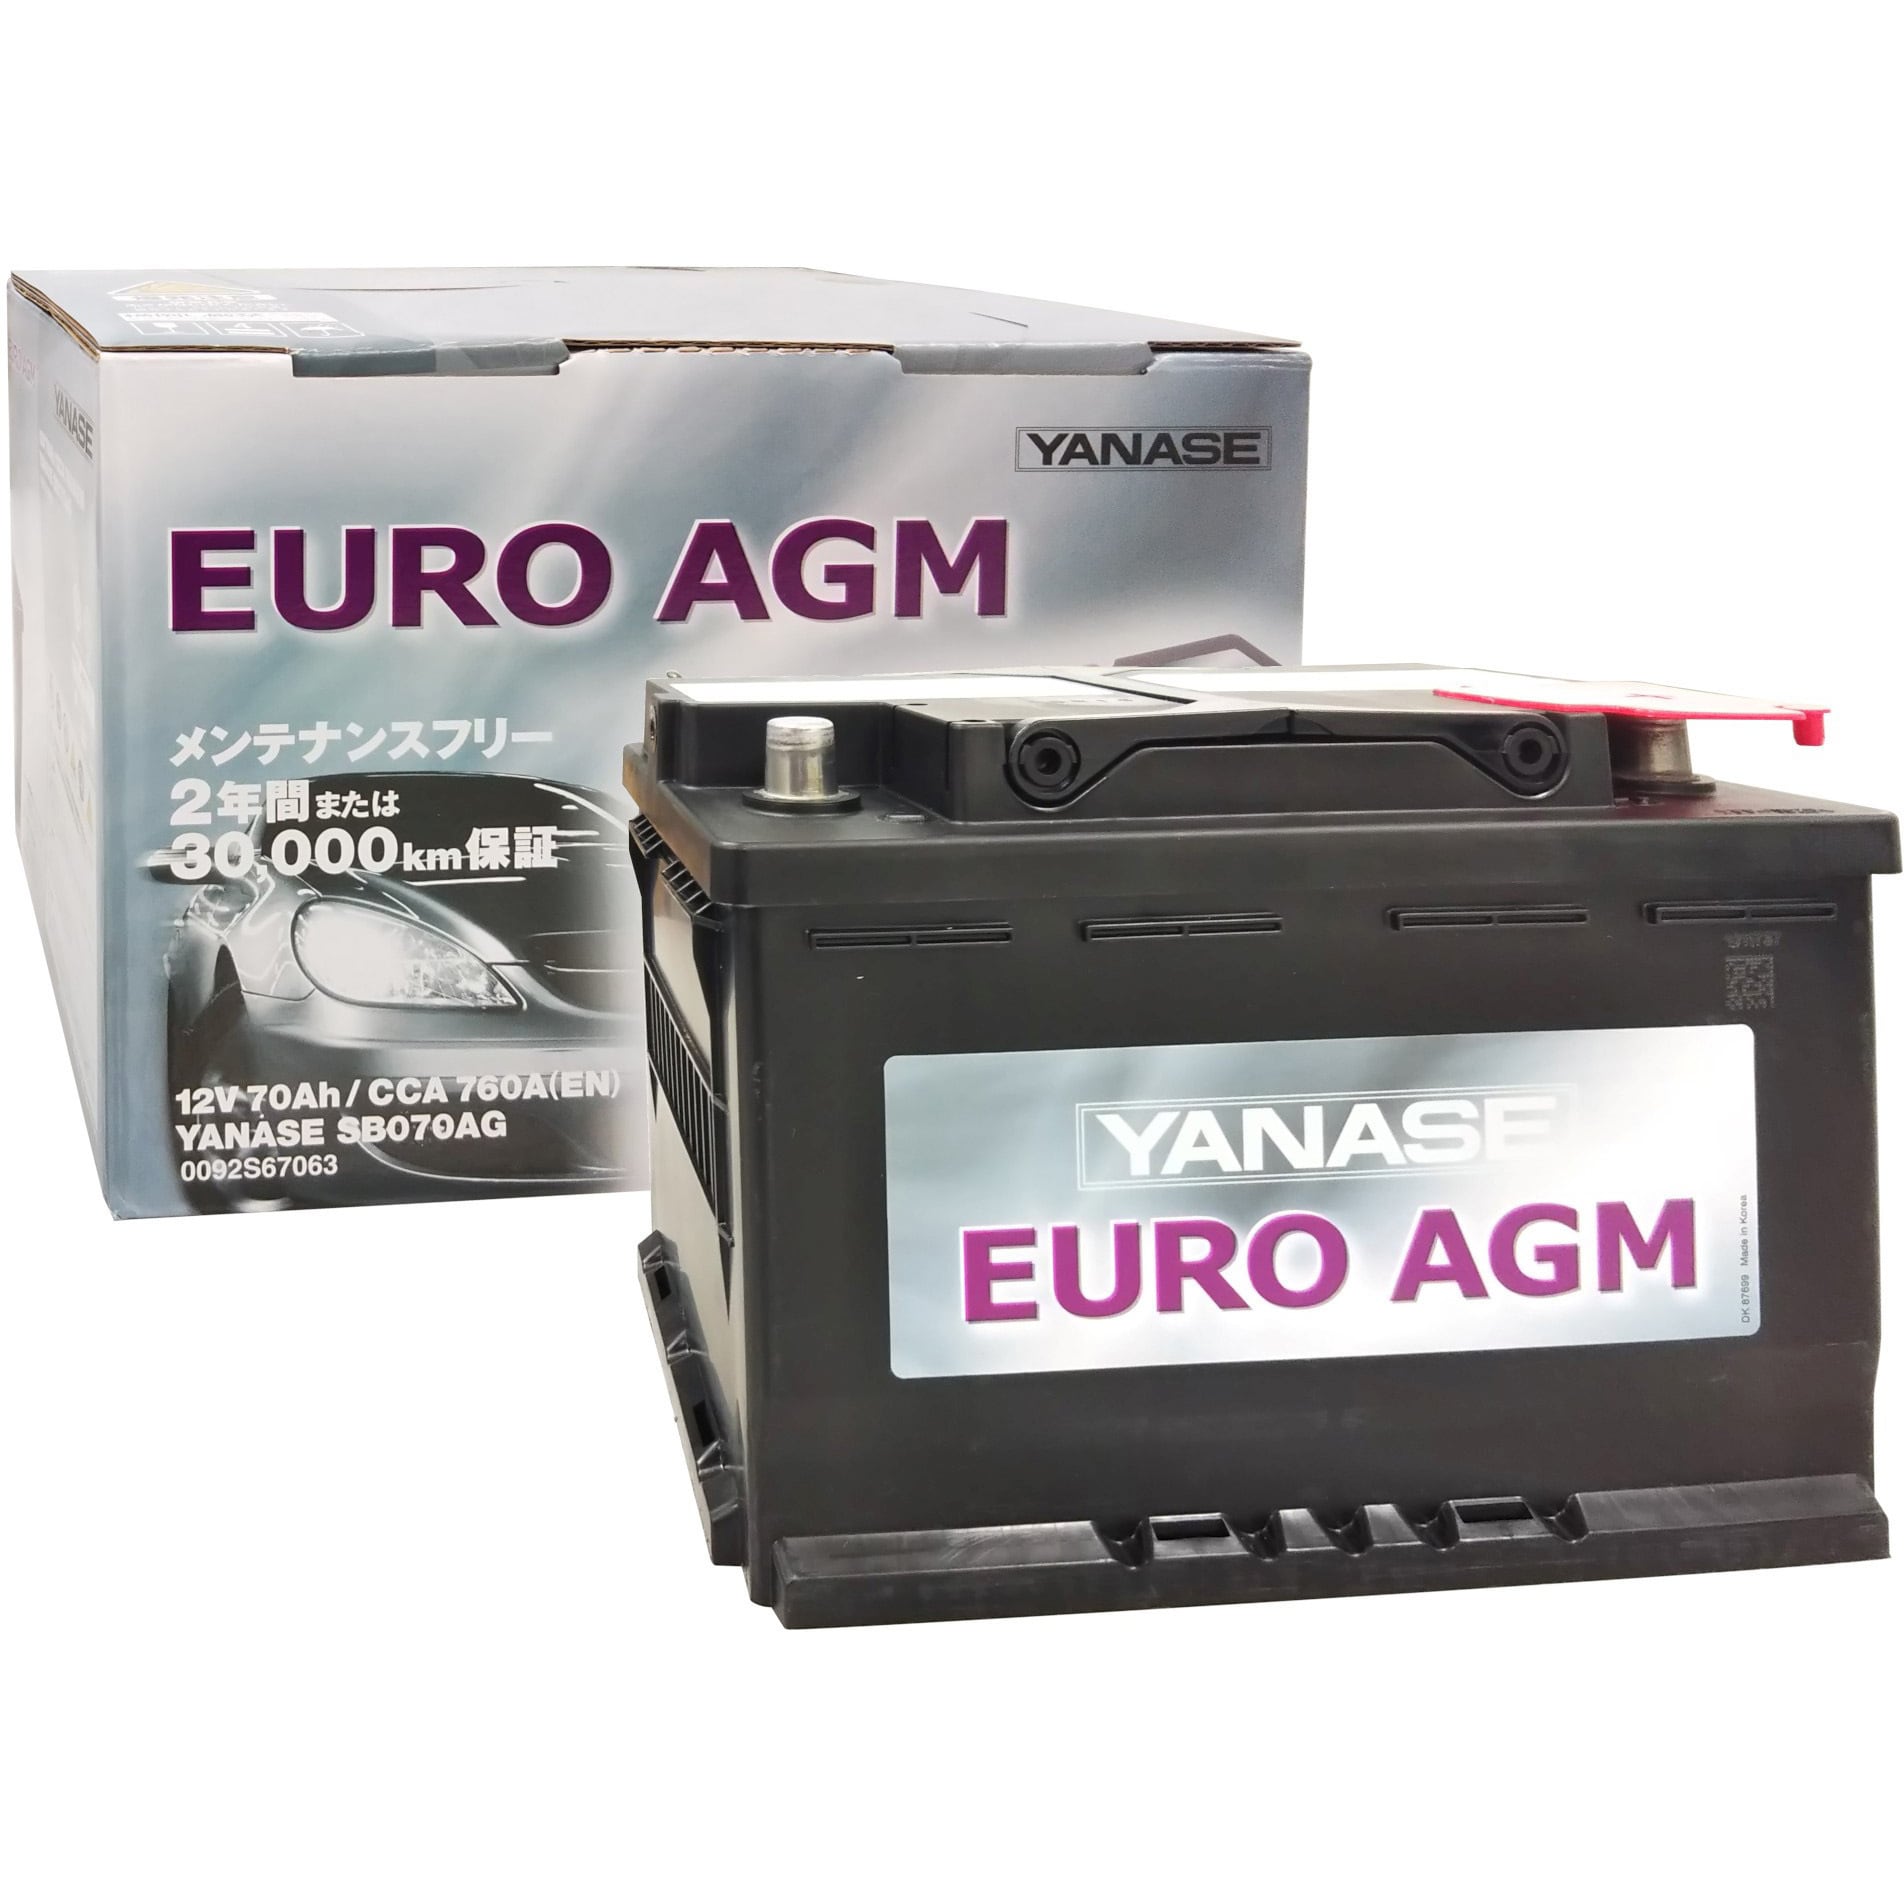 EURO AGM YANASE オリジナル・プレミアムバッテリー